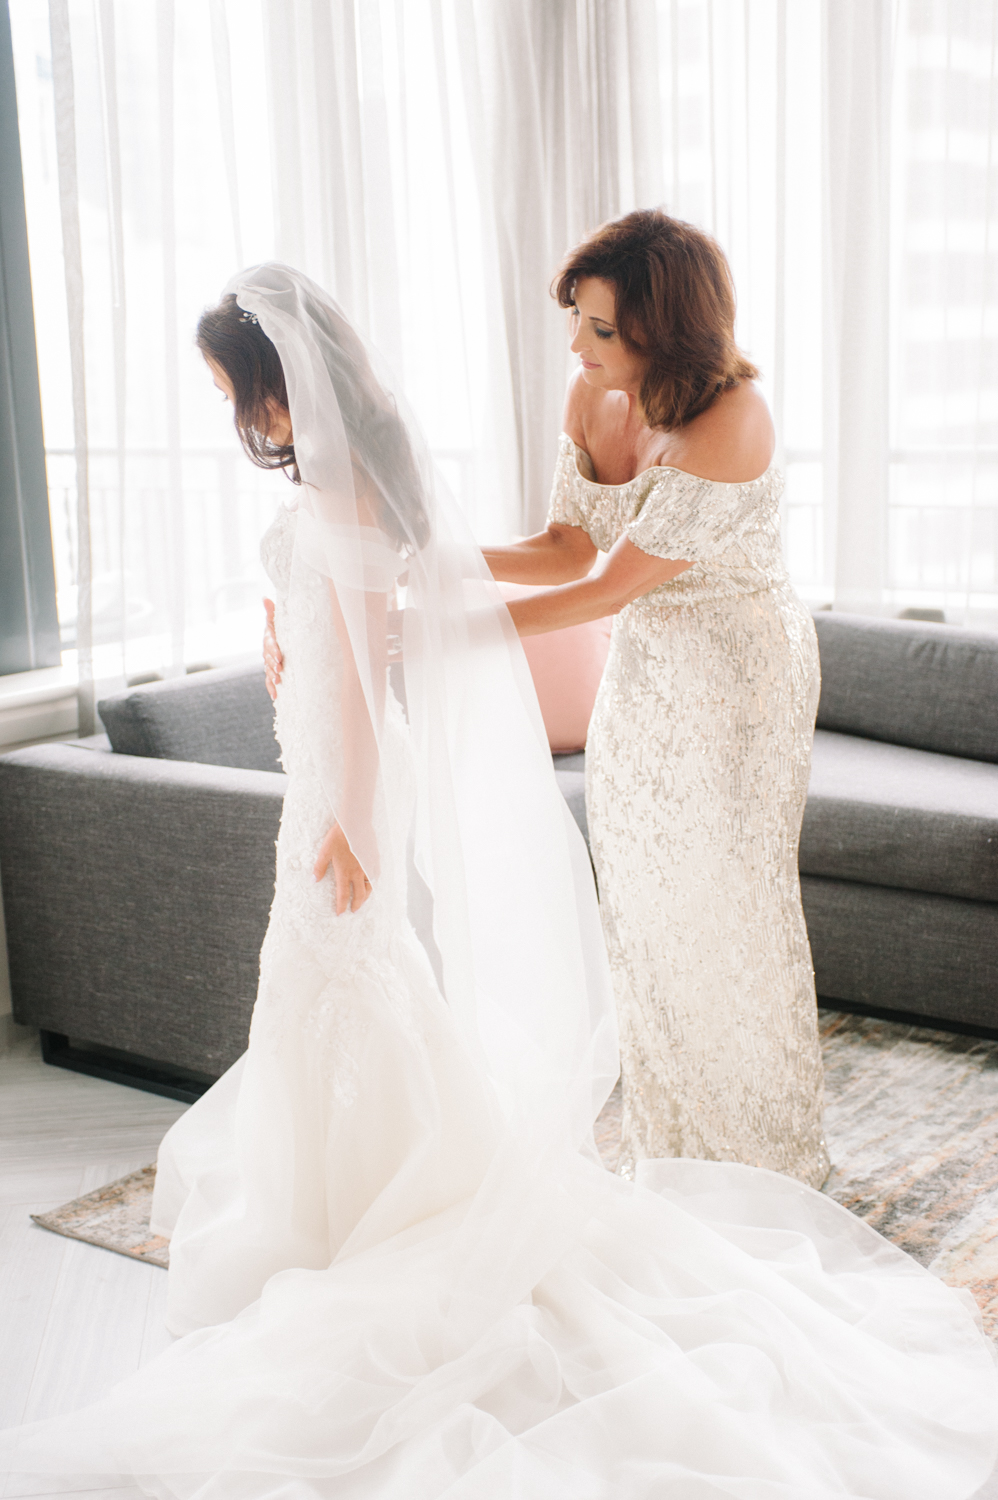 Bride and mom getting ready, Gwen Hotel Chicago, Midwest fine art wedding photographer Erica Robnett